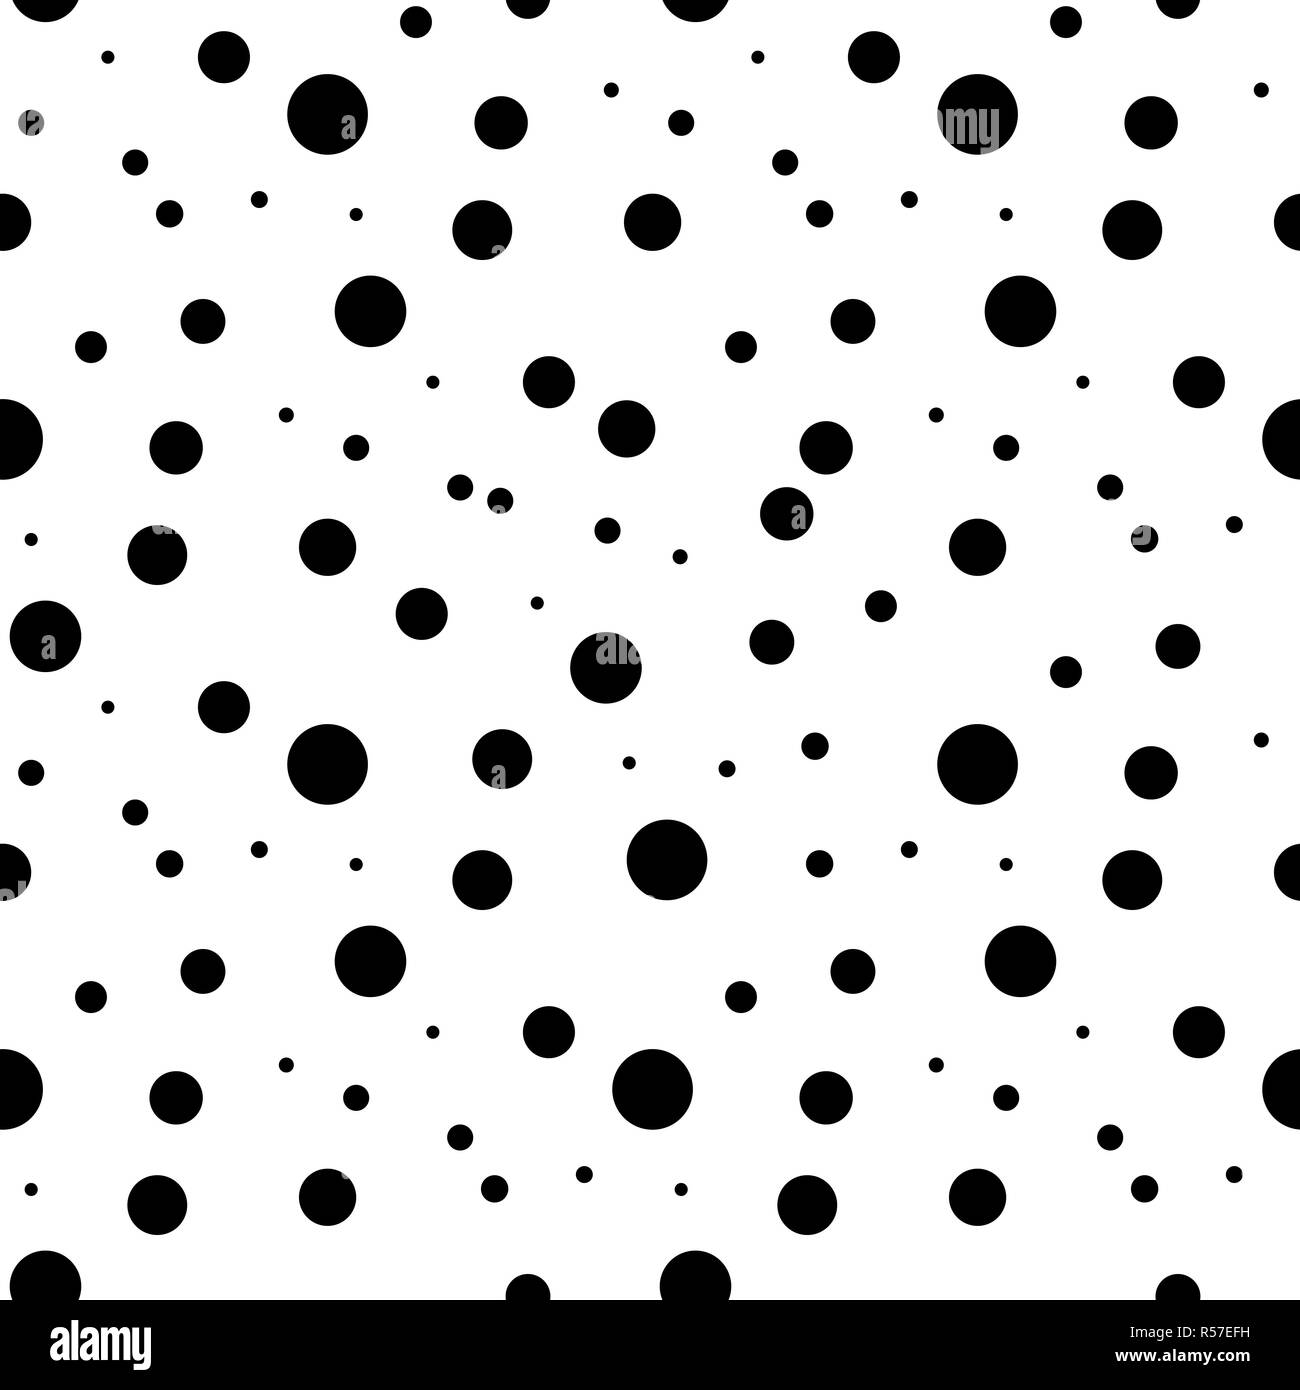 Seamless Polka Dot Pattern Black Dots On White Background Vector Illustration Eps10 Stock